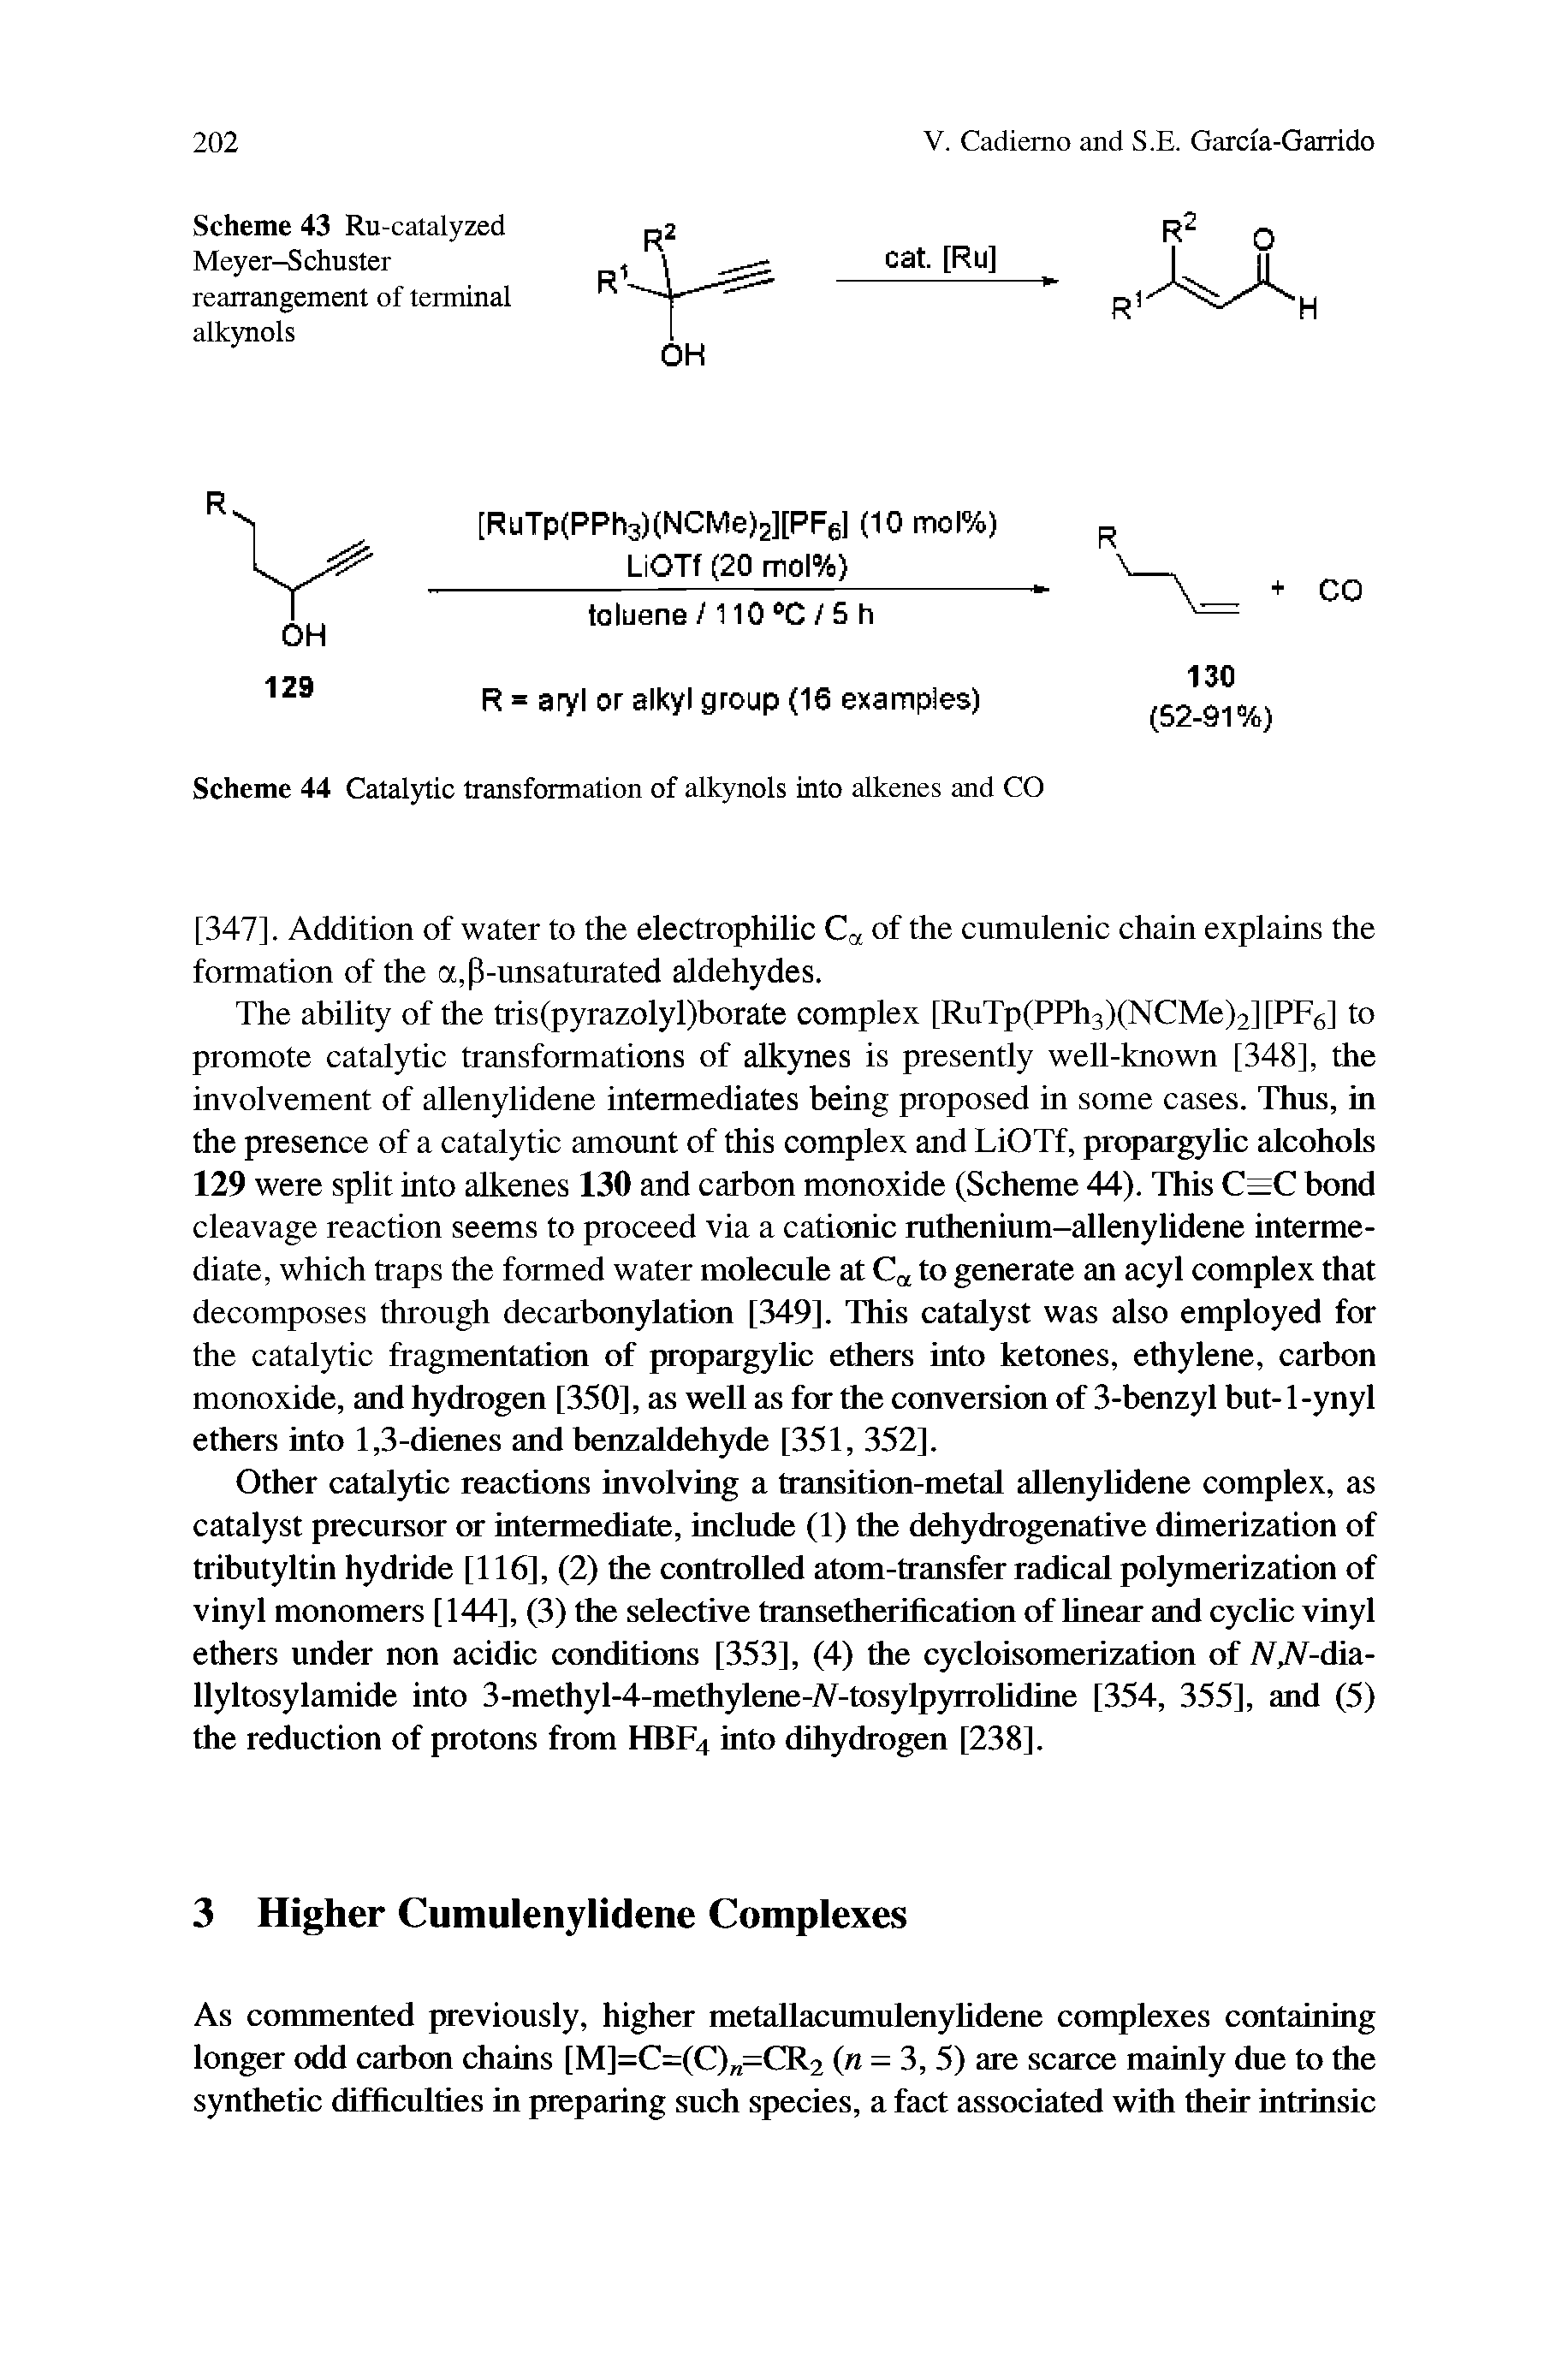 Scheme 43 Ru-catalyzed Meyer-Schuster rearrangement of terminal alkynols...